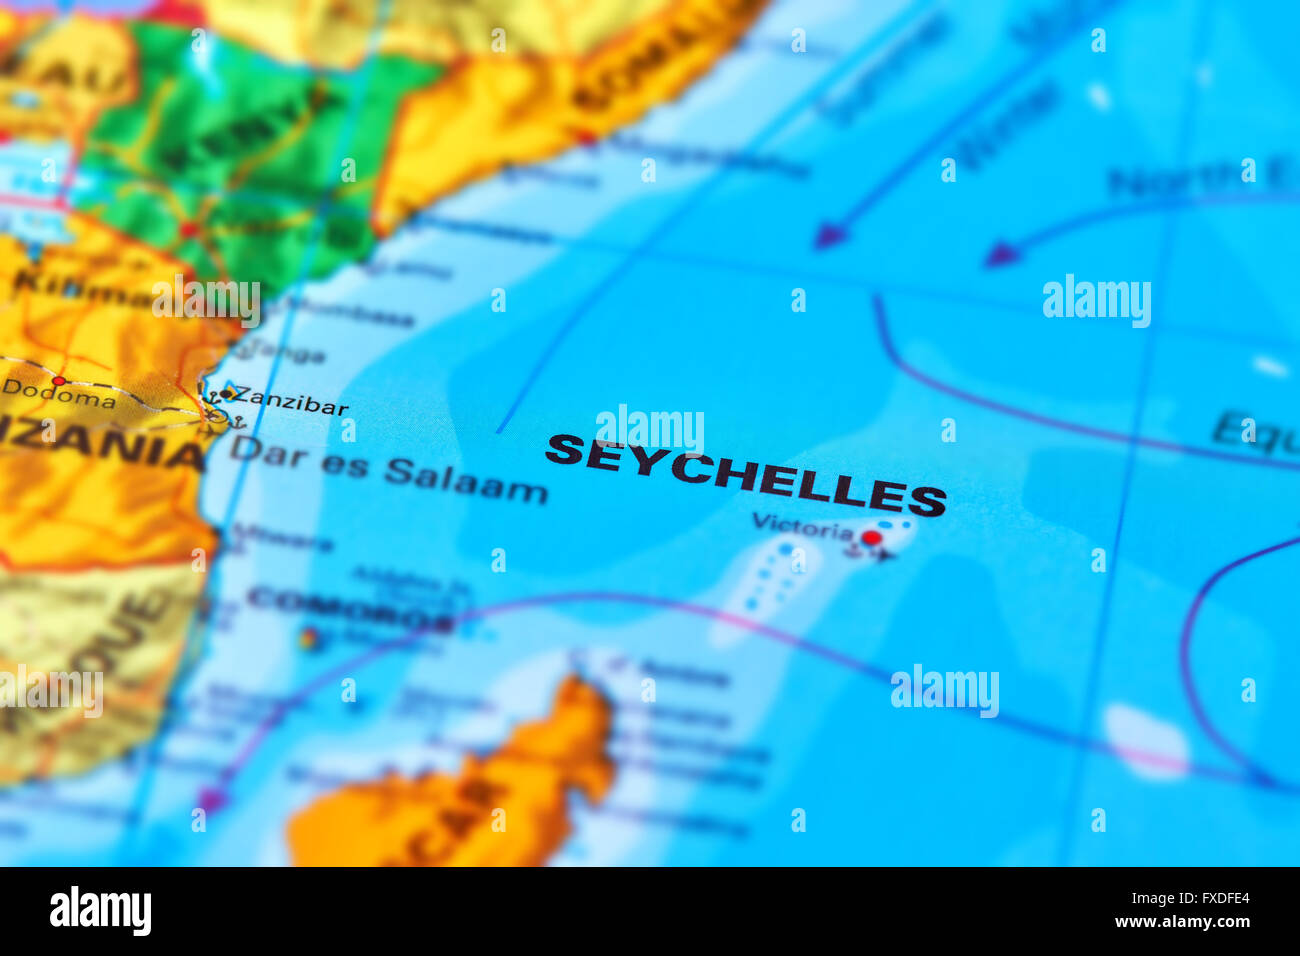 Seychelles Islands on the World Map Stock Photo